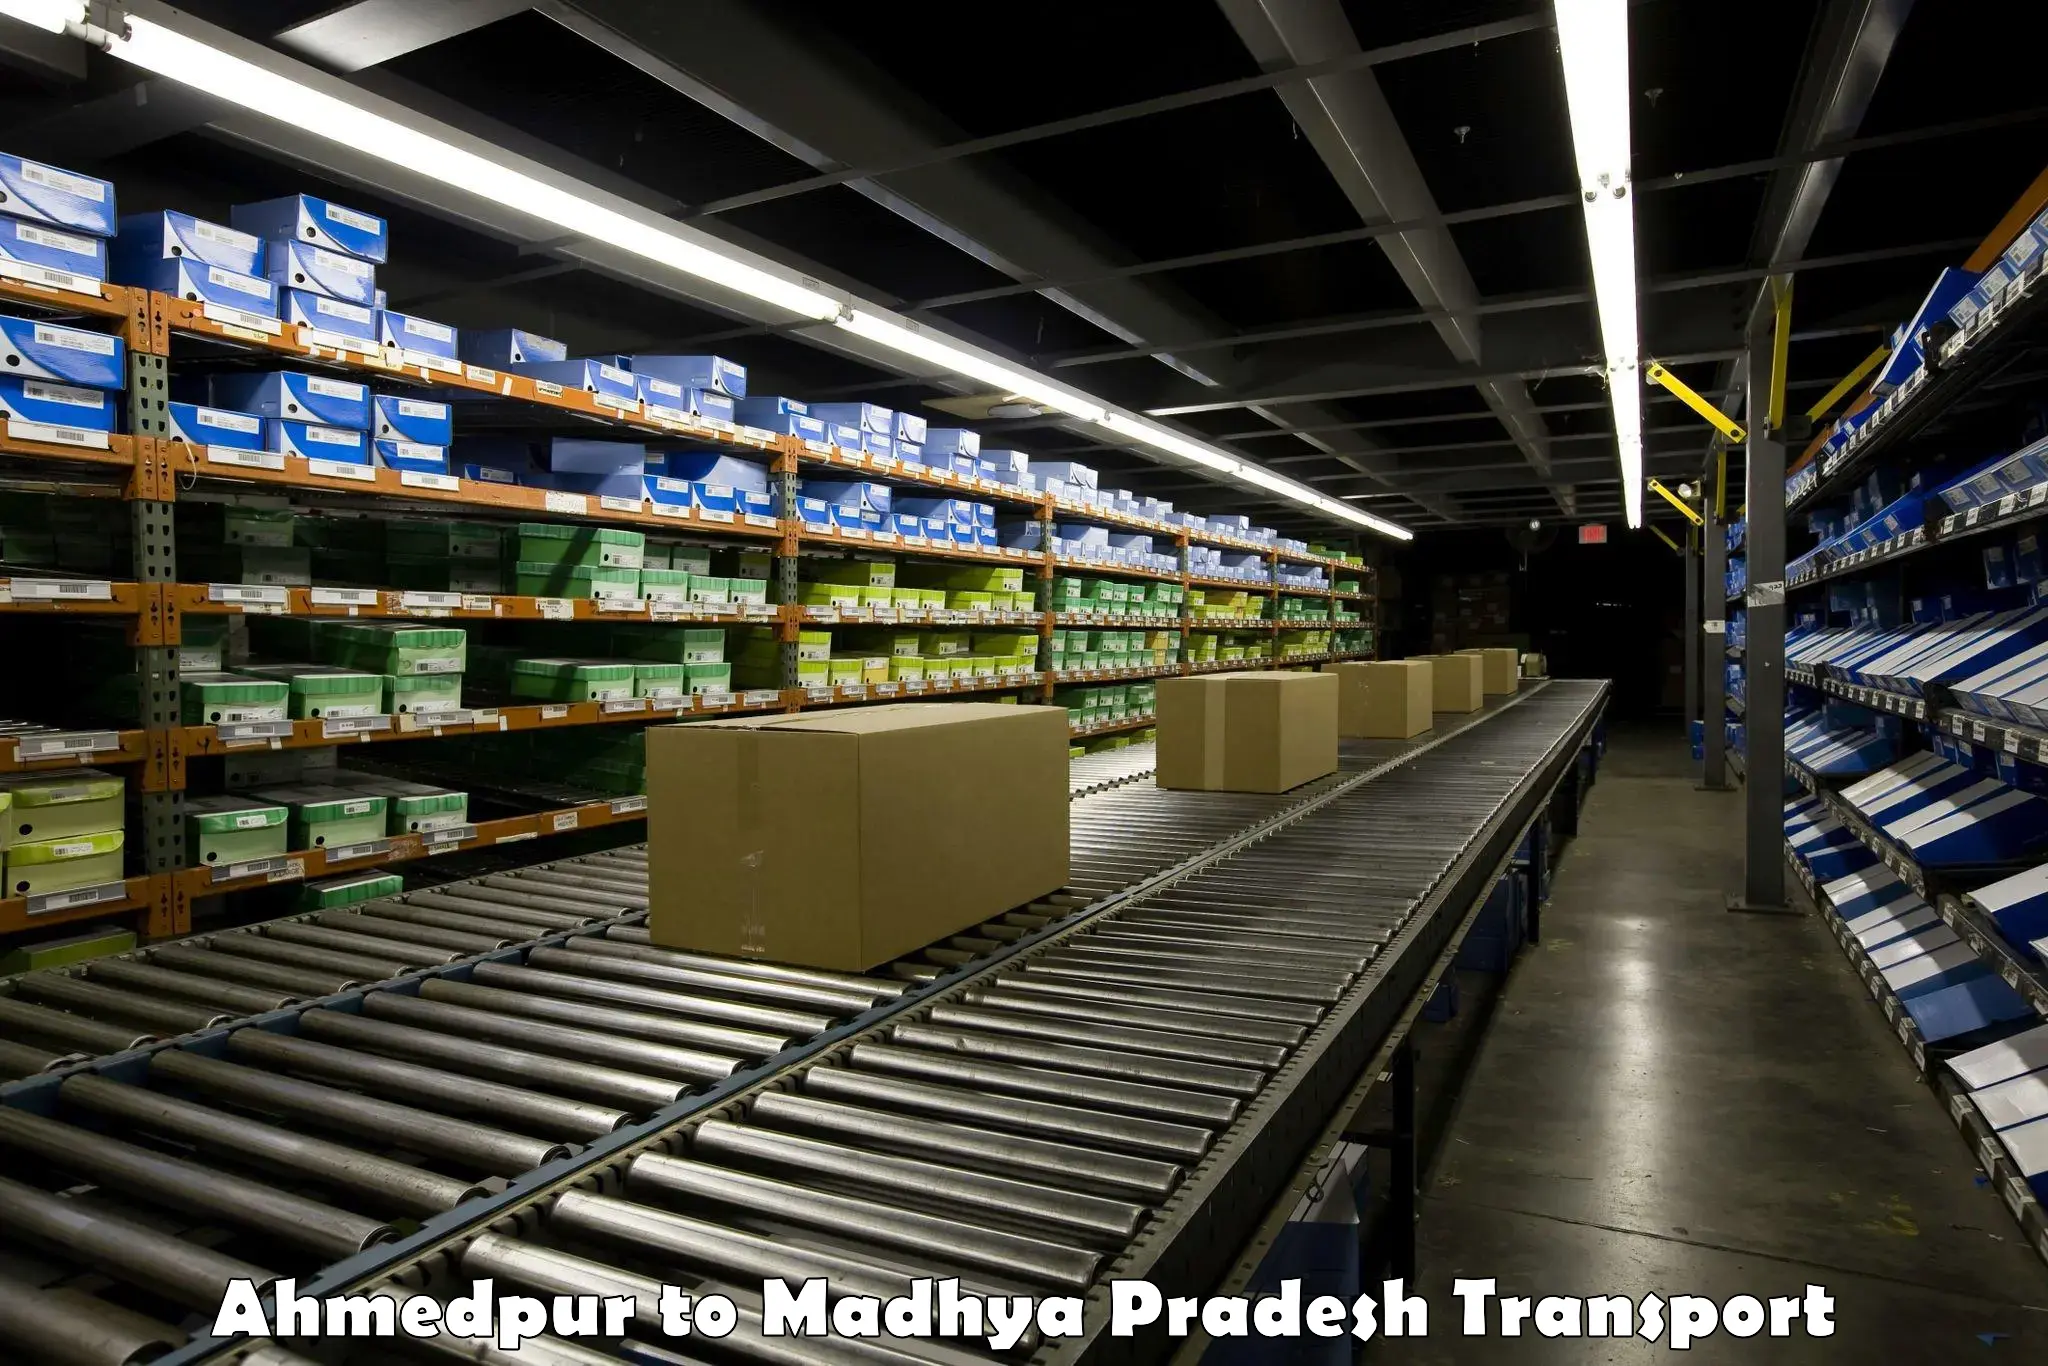 Truck transport companies in India Ahmedpur to Deosar